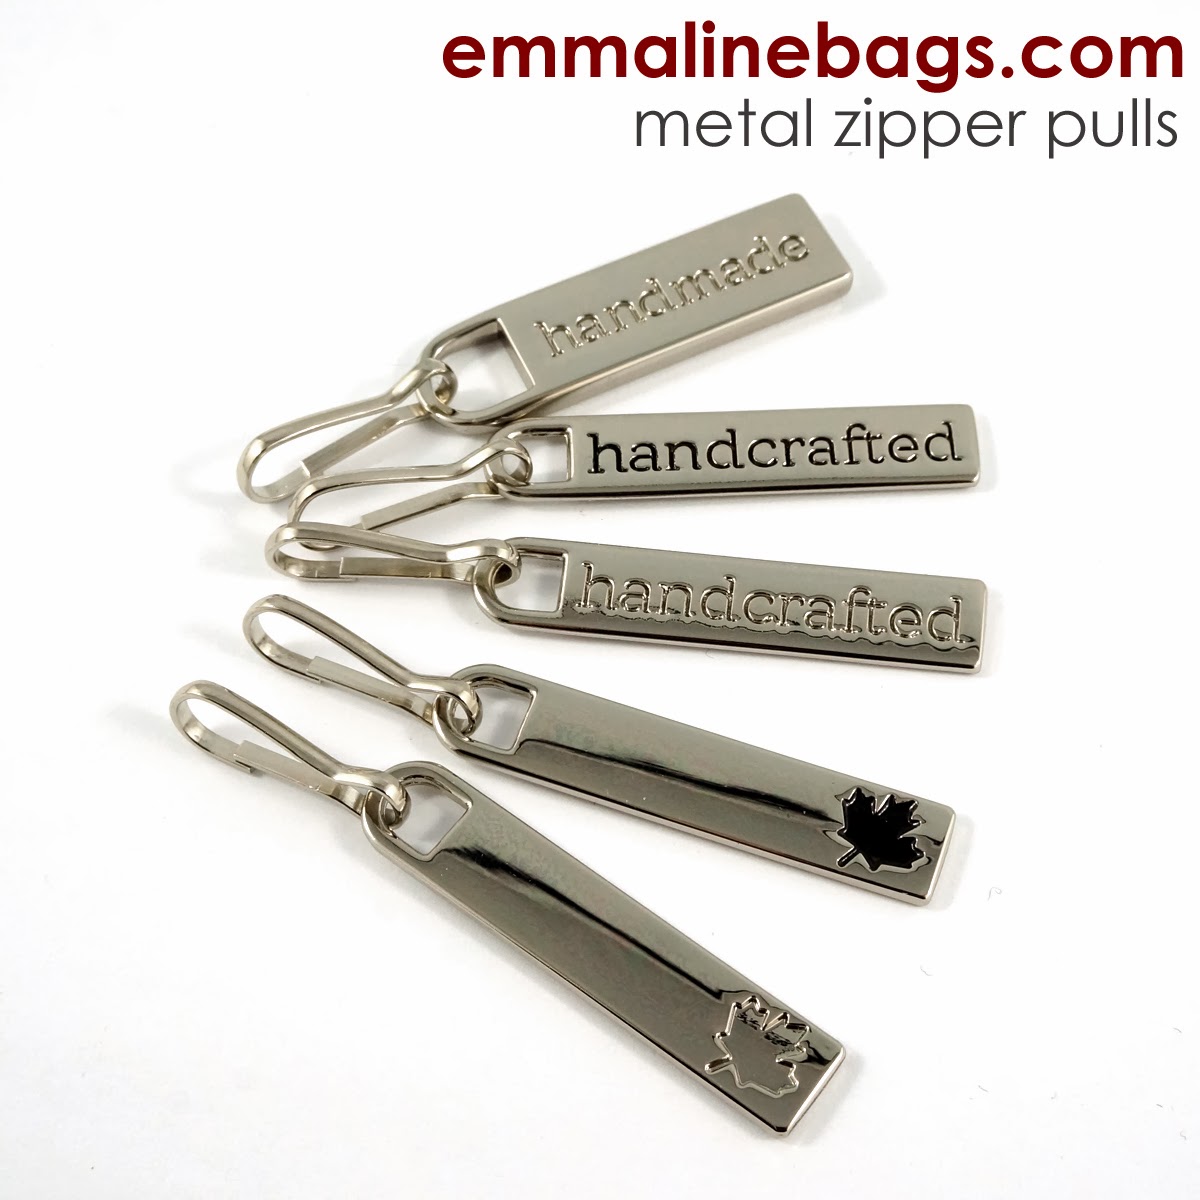 Metal zipper pulls for handmade bags